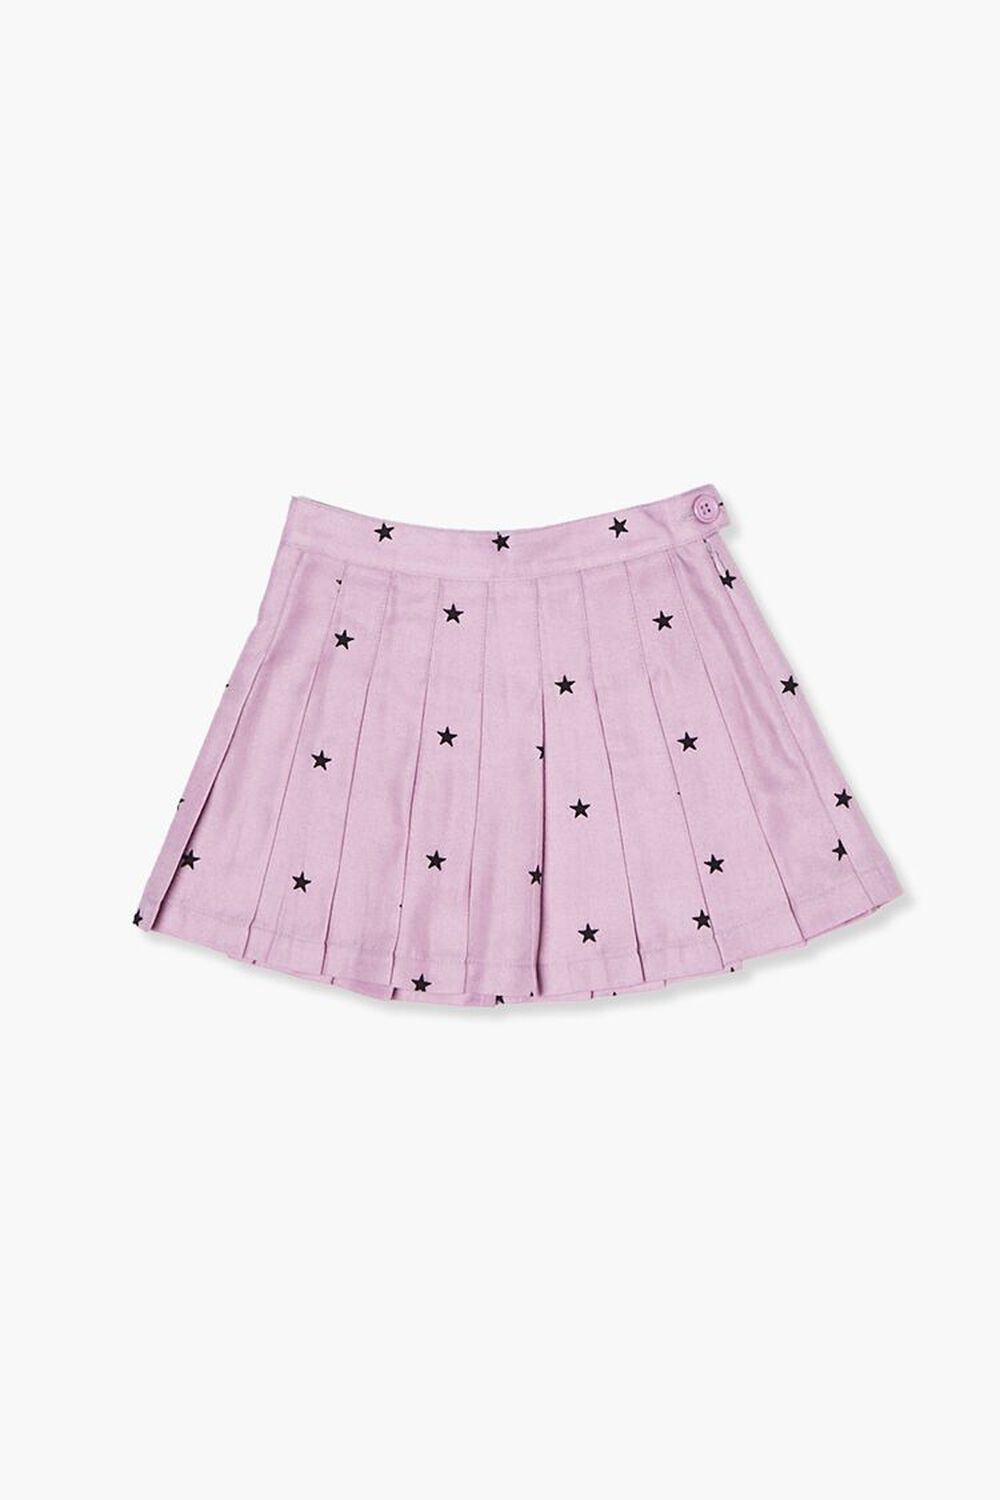 PURPLE/BLACK Girls Star Print Pleated Skirt (Kids), image 1